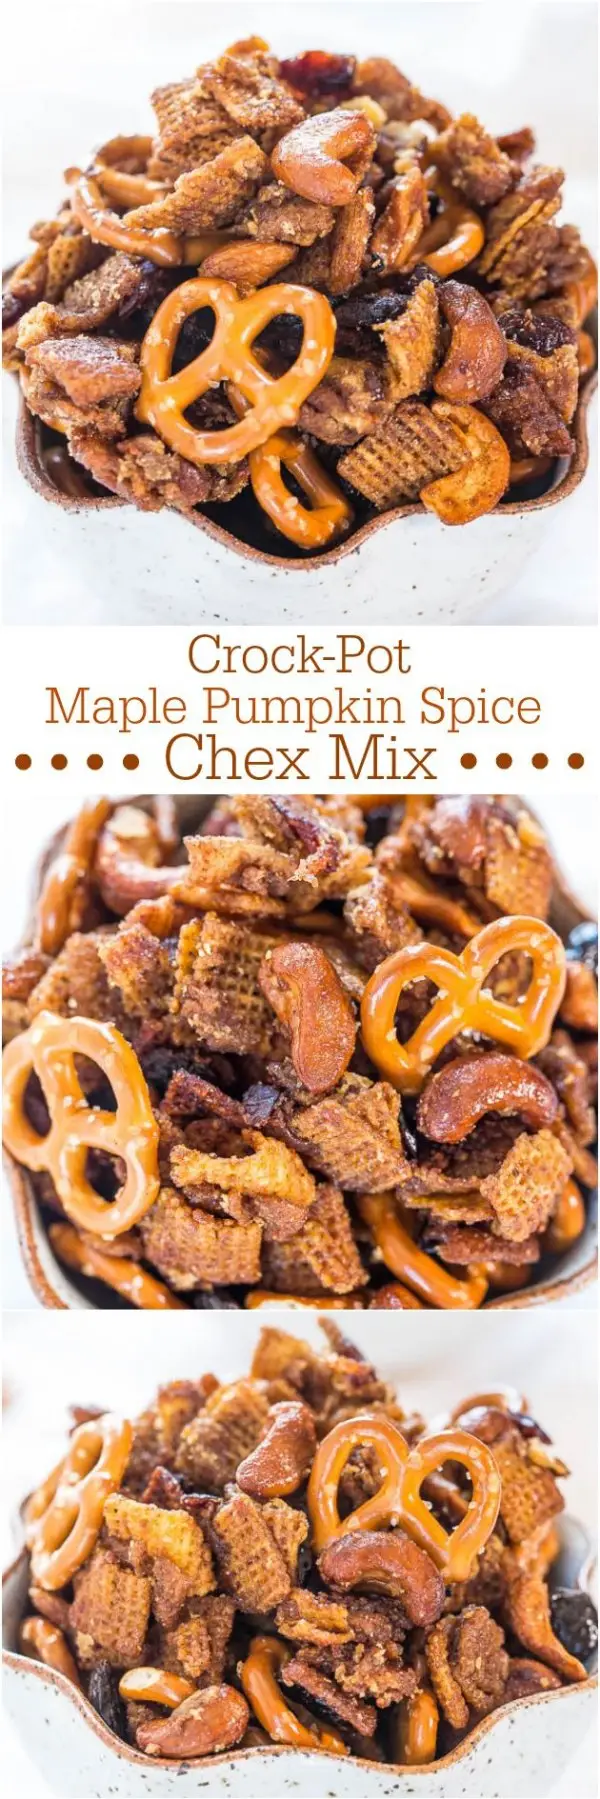 Crock-Pot Maple Pumpkin Spice Chex Mix